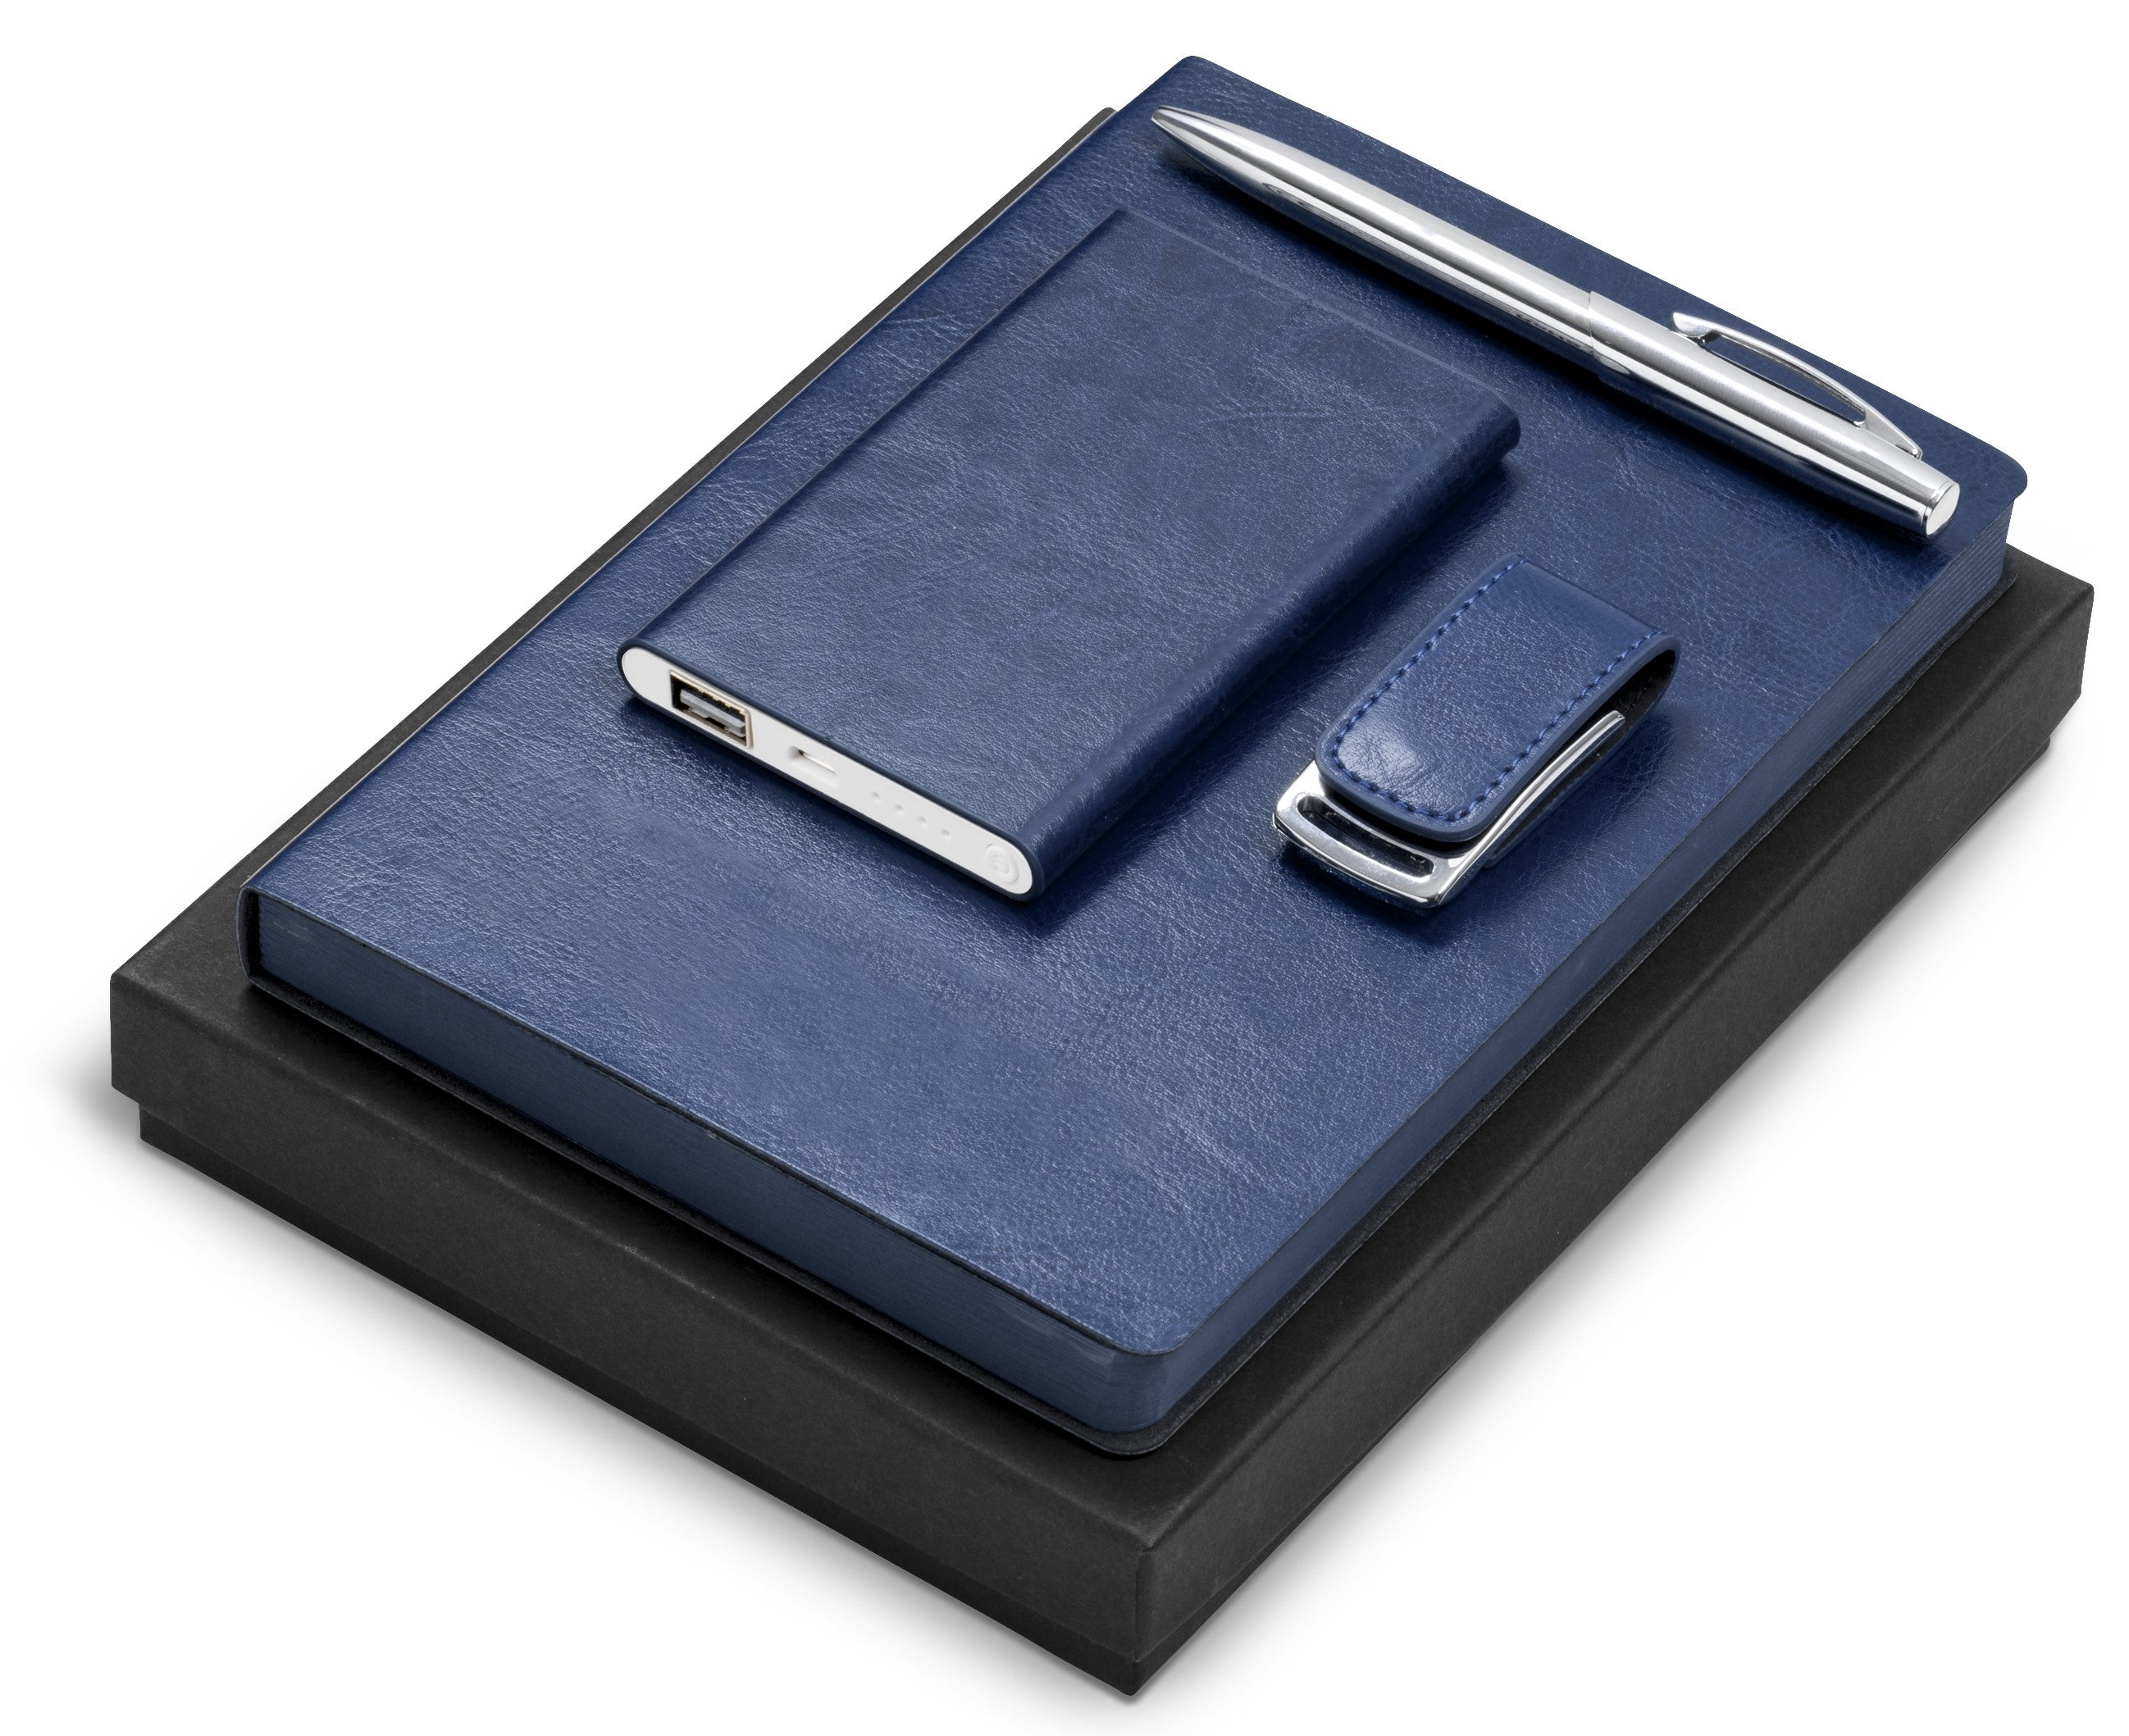 Regnant Power Bank, Notebook, Memory Stick & Ball Pen Gift Set